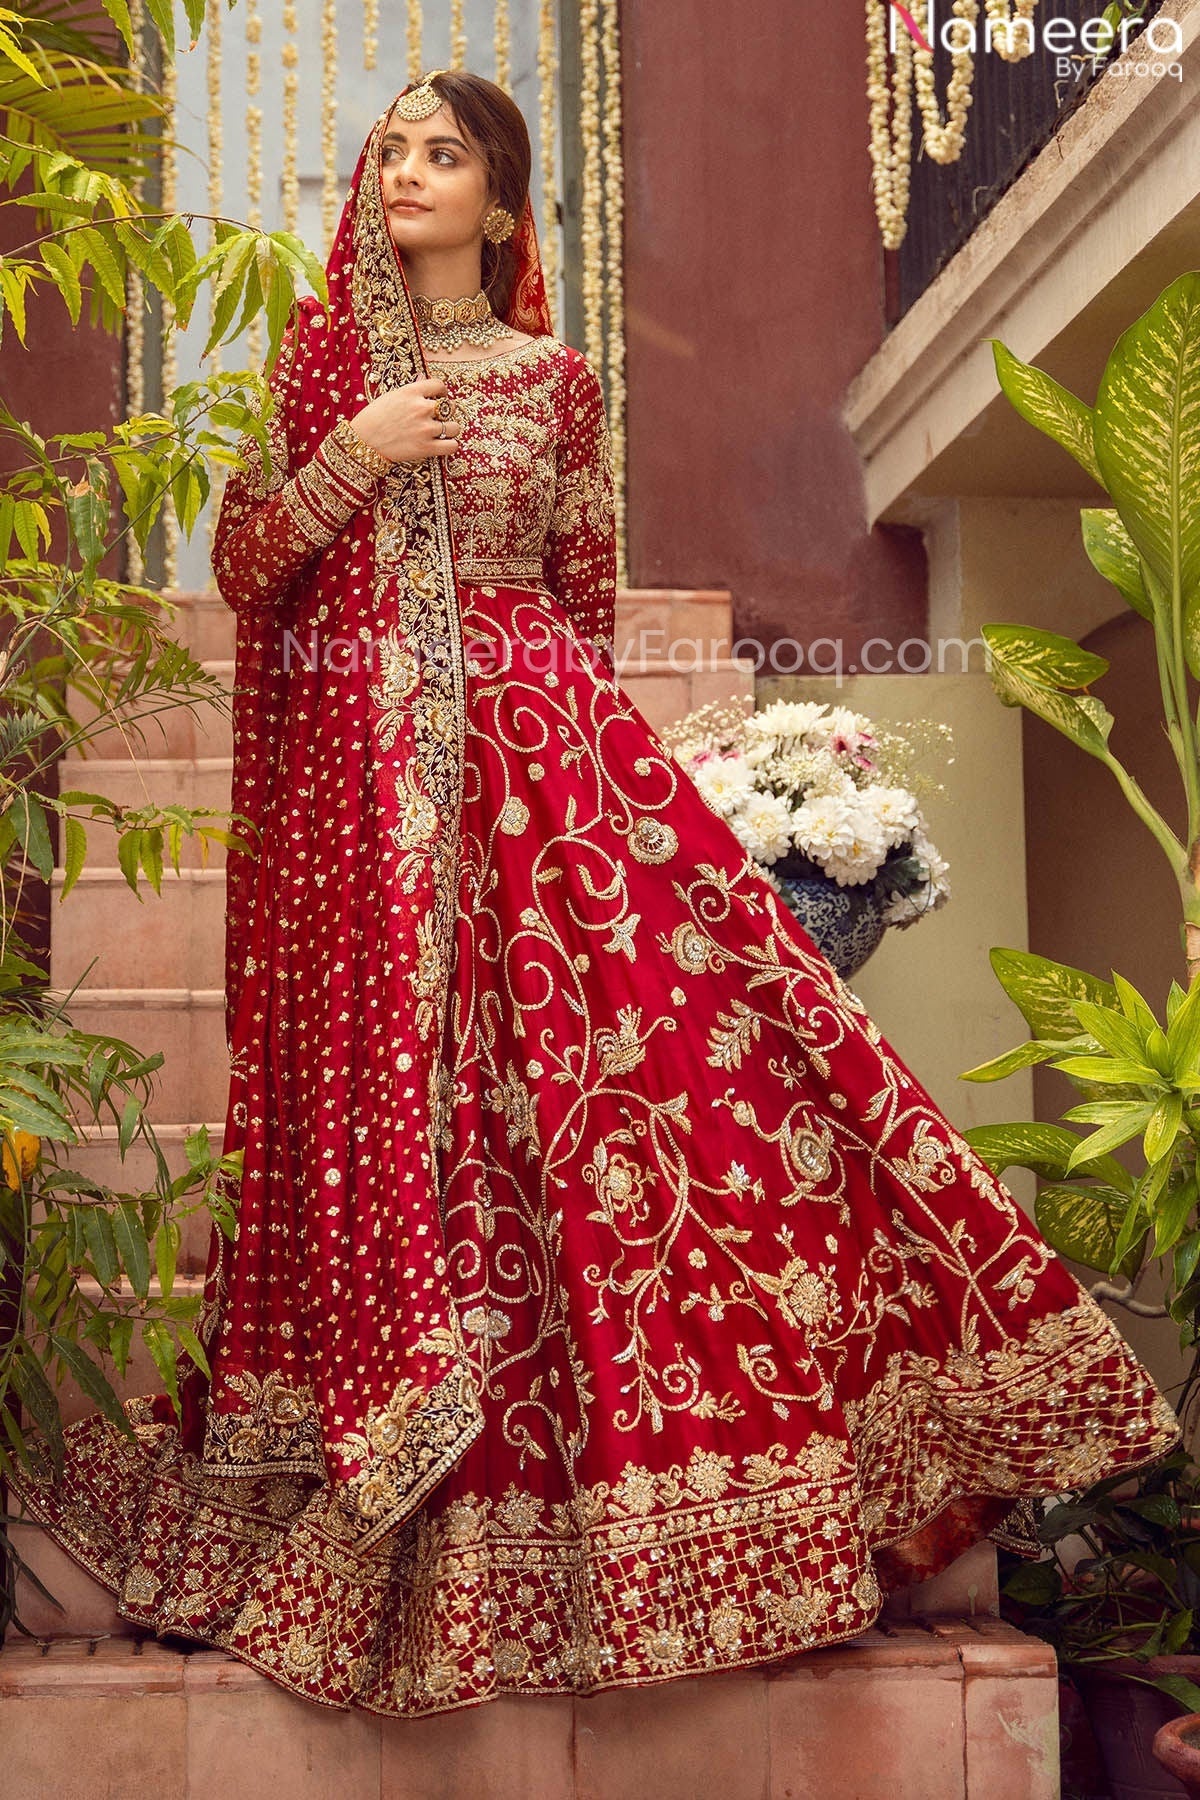 Pretty Red Bridal Dress Pakistani Designer Attire Online 2021 Nameera 